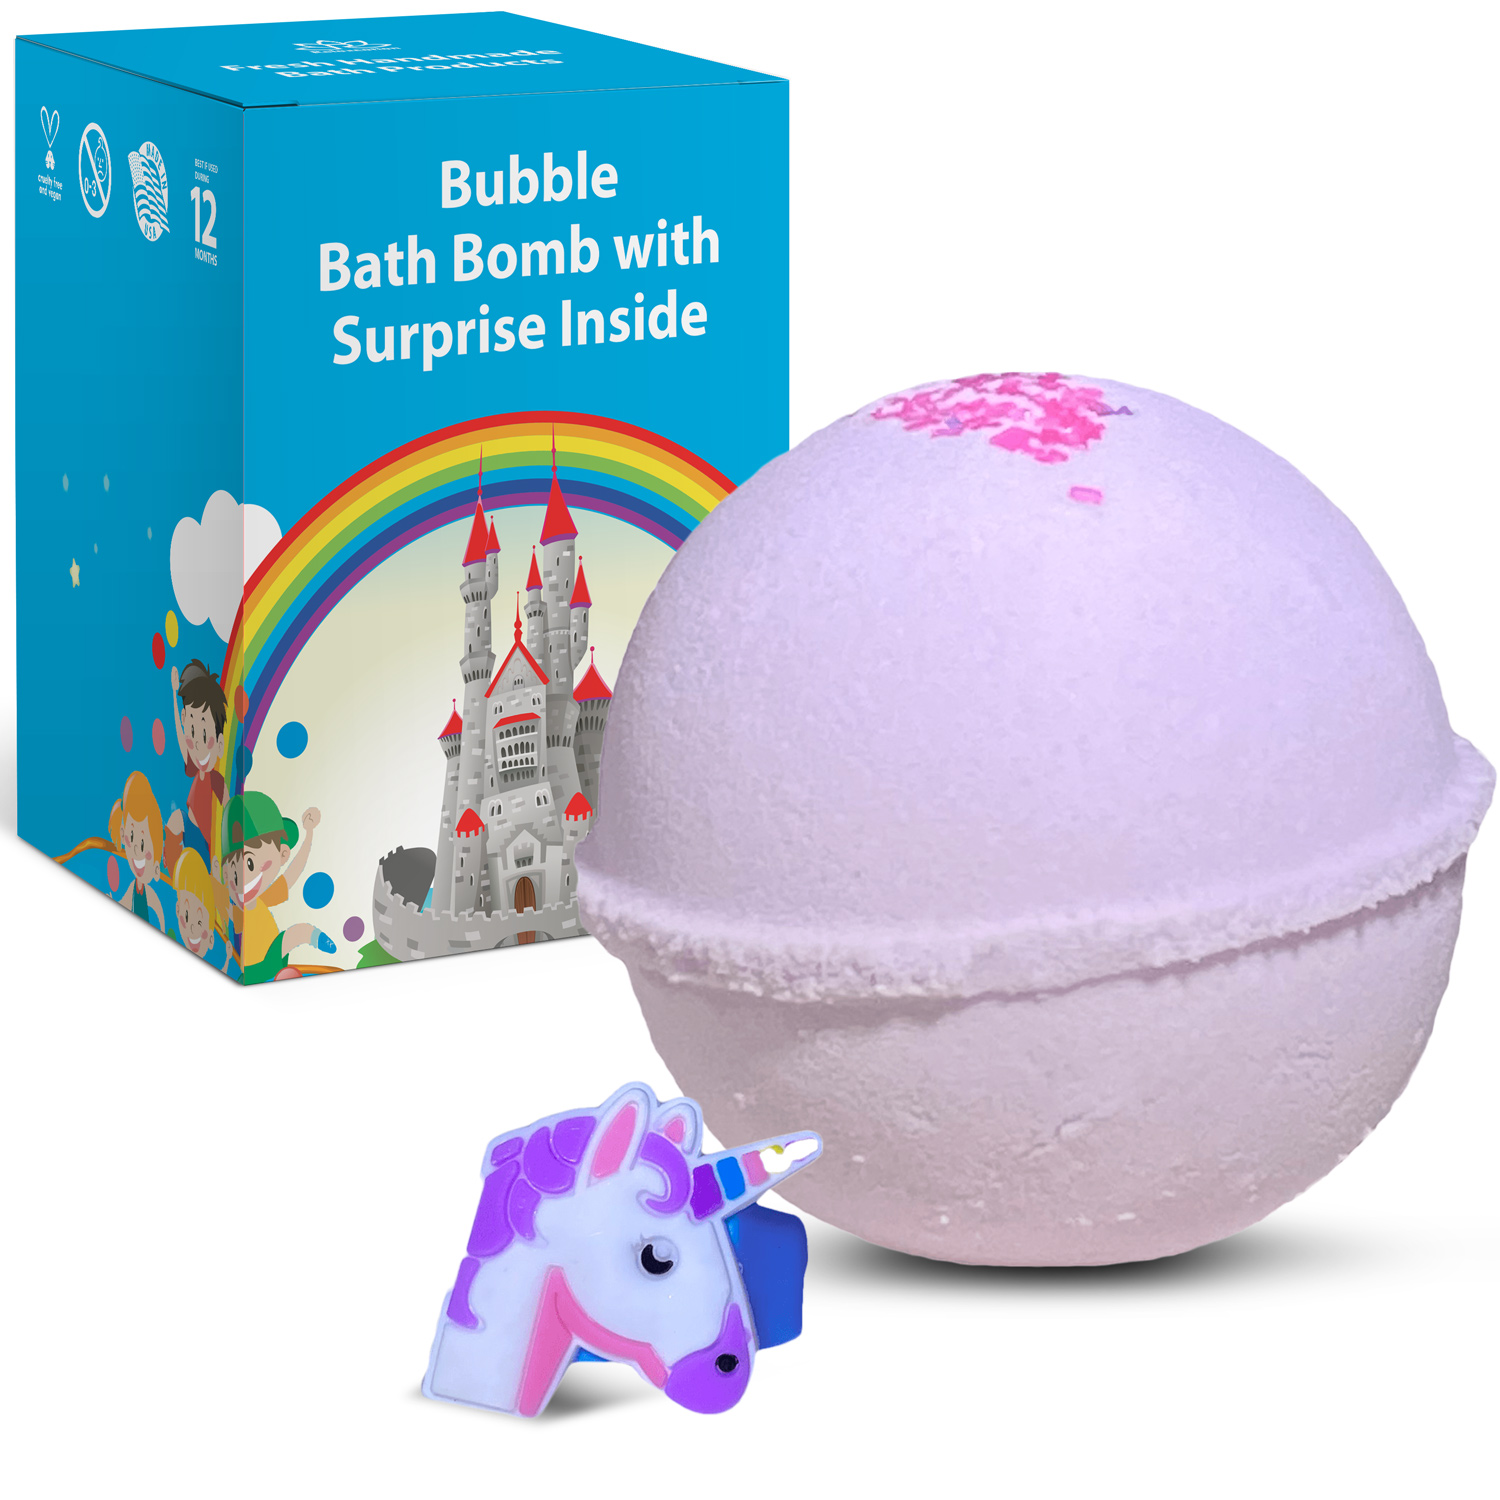 Unicorn Bath Bomb